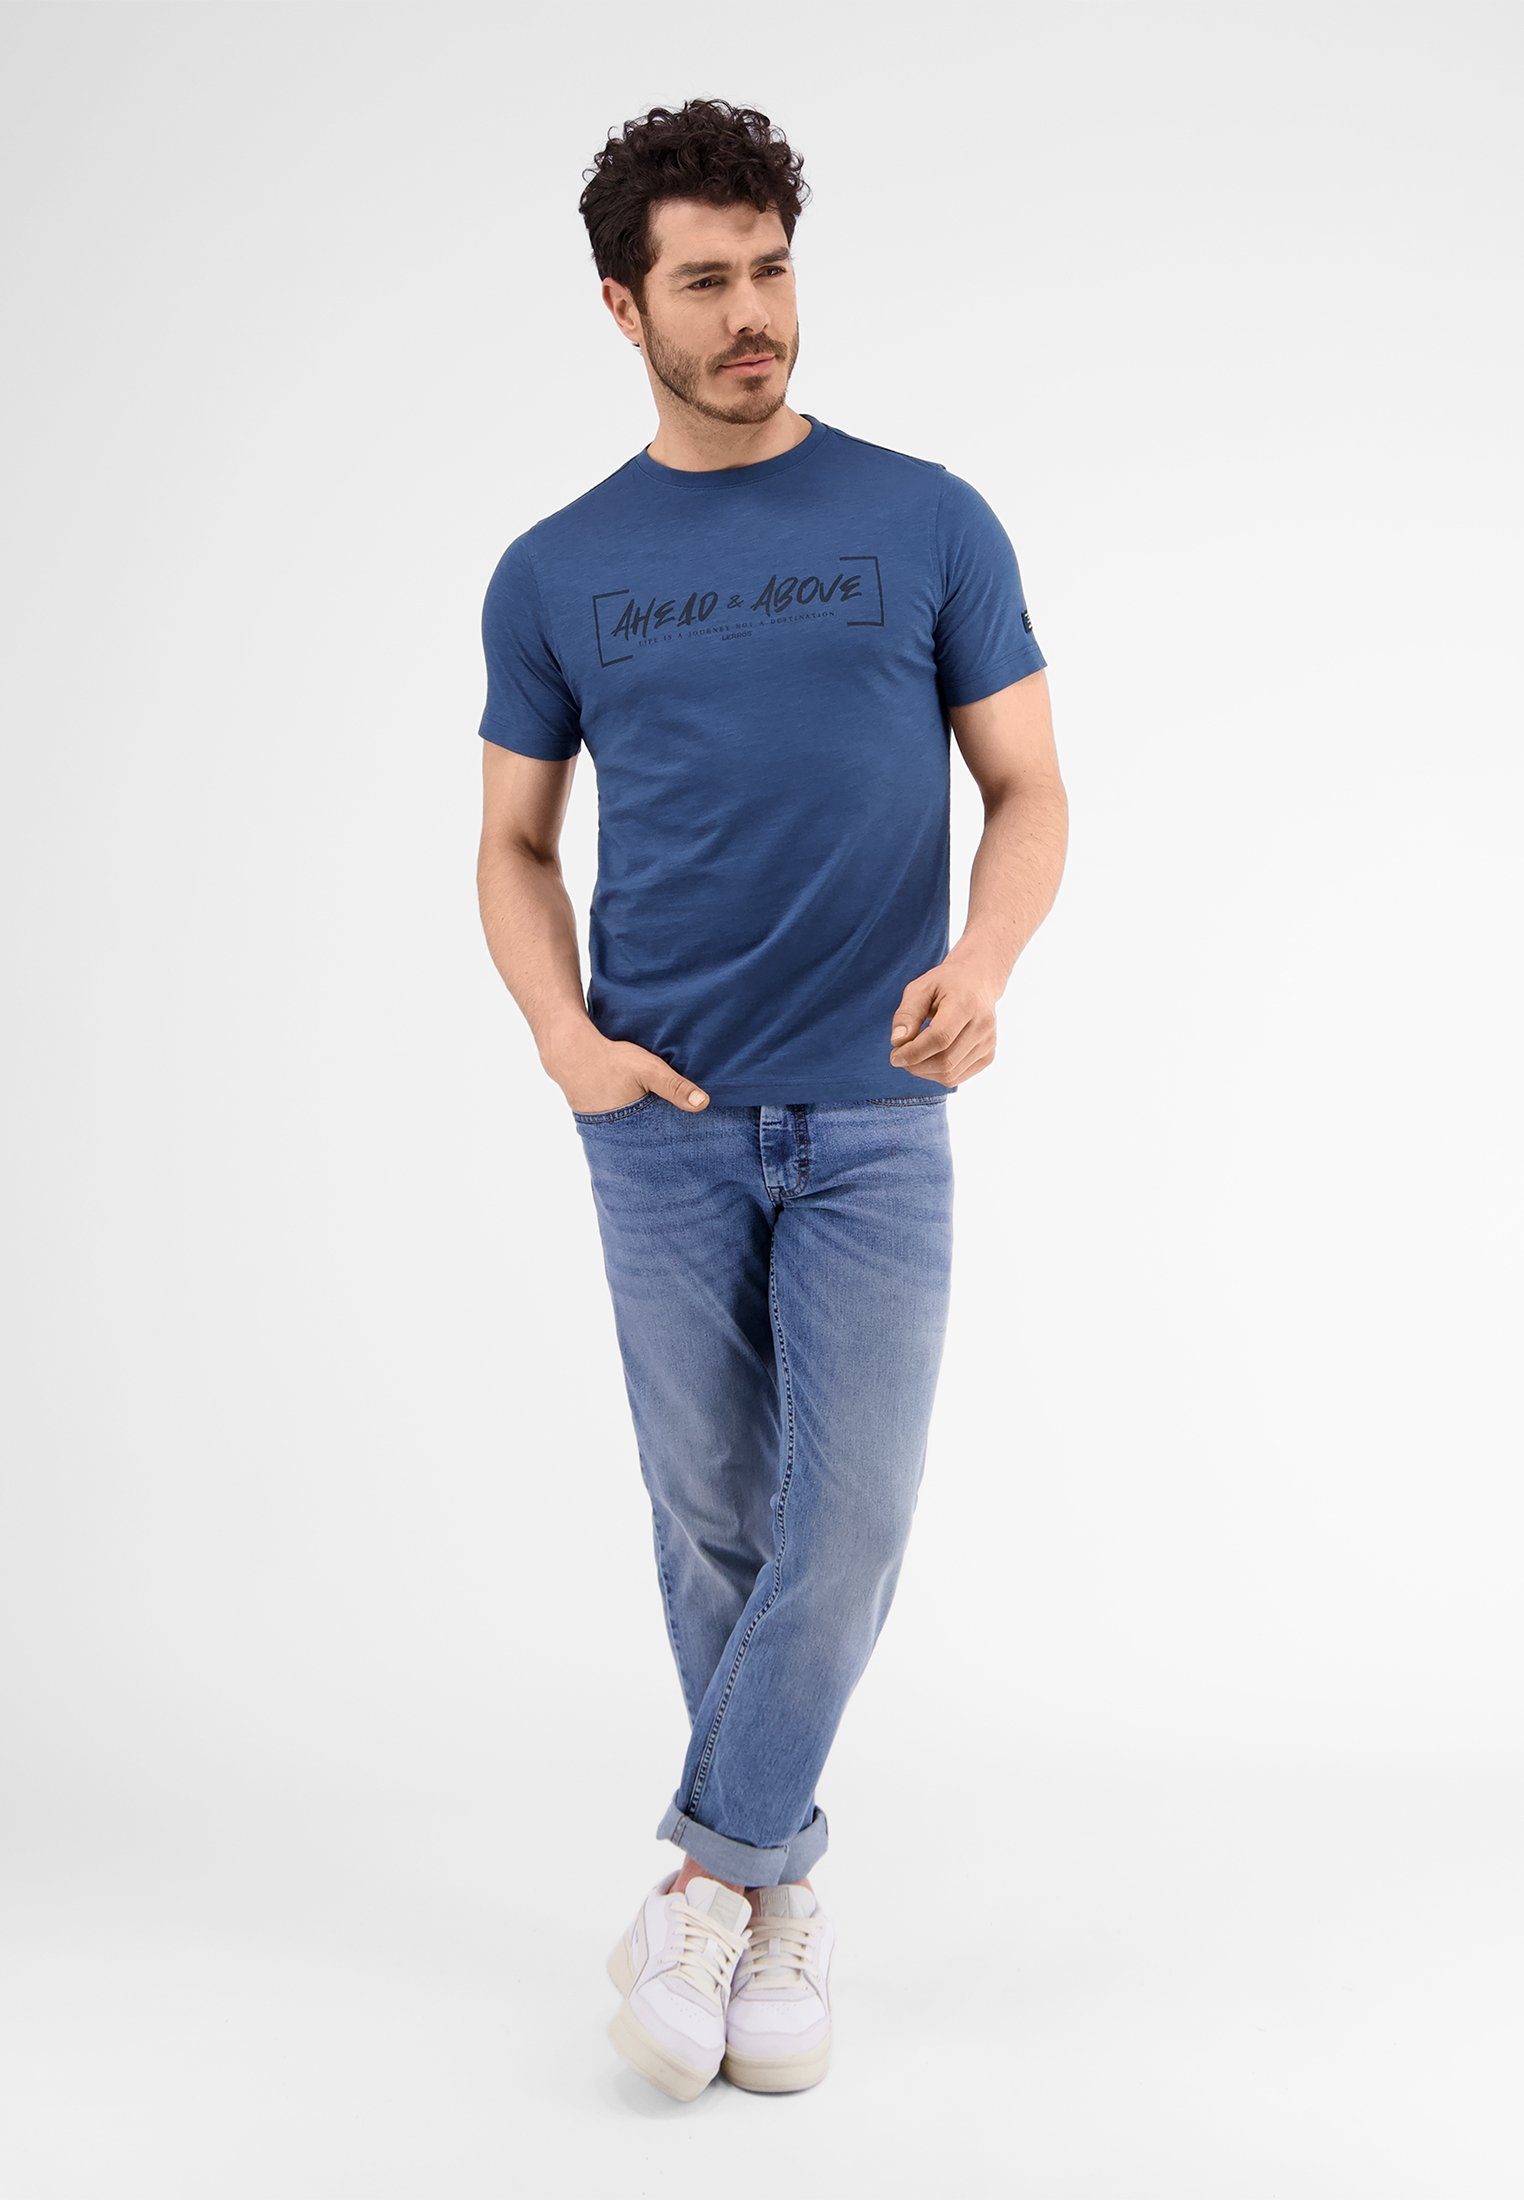 T-Shirt & *Ahead TRAVEL LERROS Above* BLUE T-Shirt LERROS